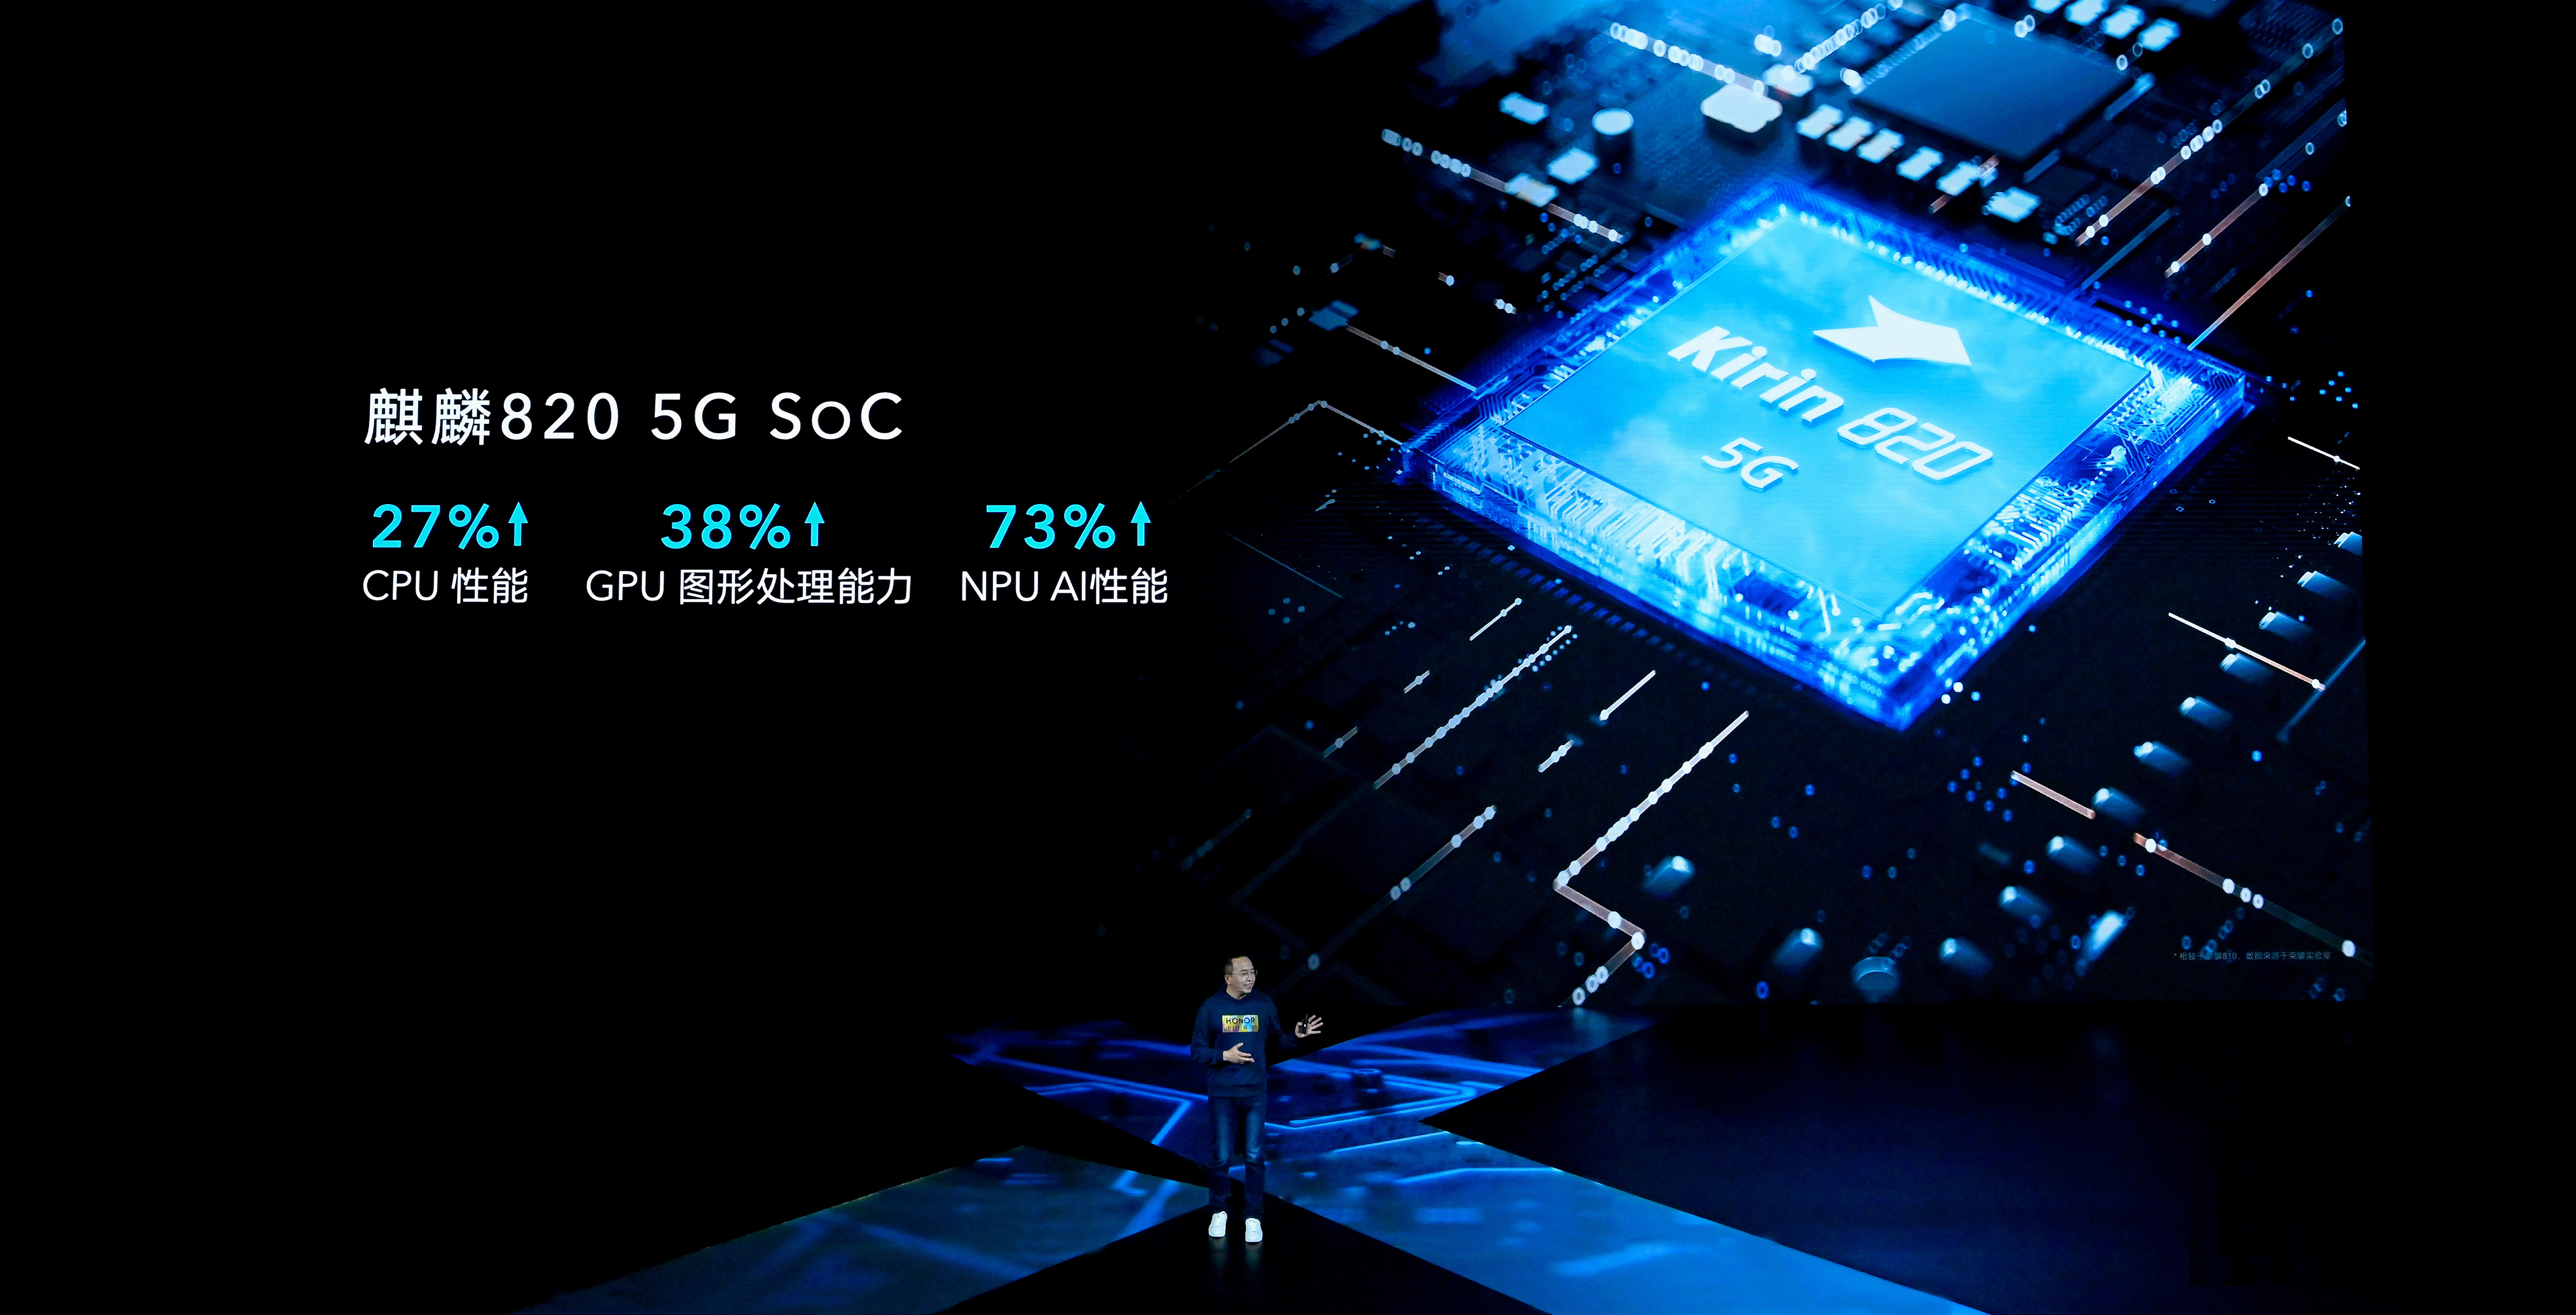 5G 时代：深圳与上海，谁将在科技盛典中闪耀夺目？  第5张